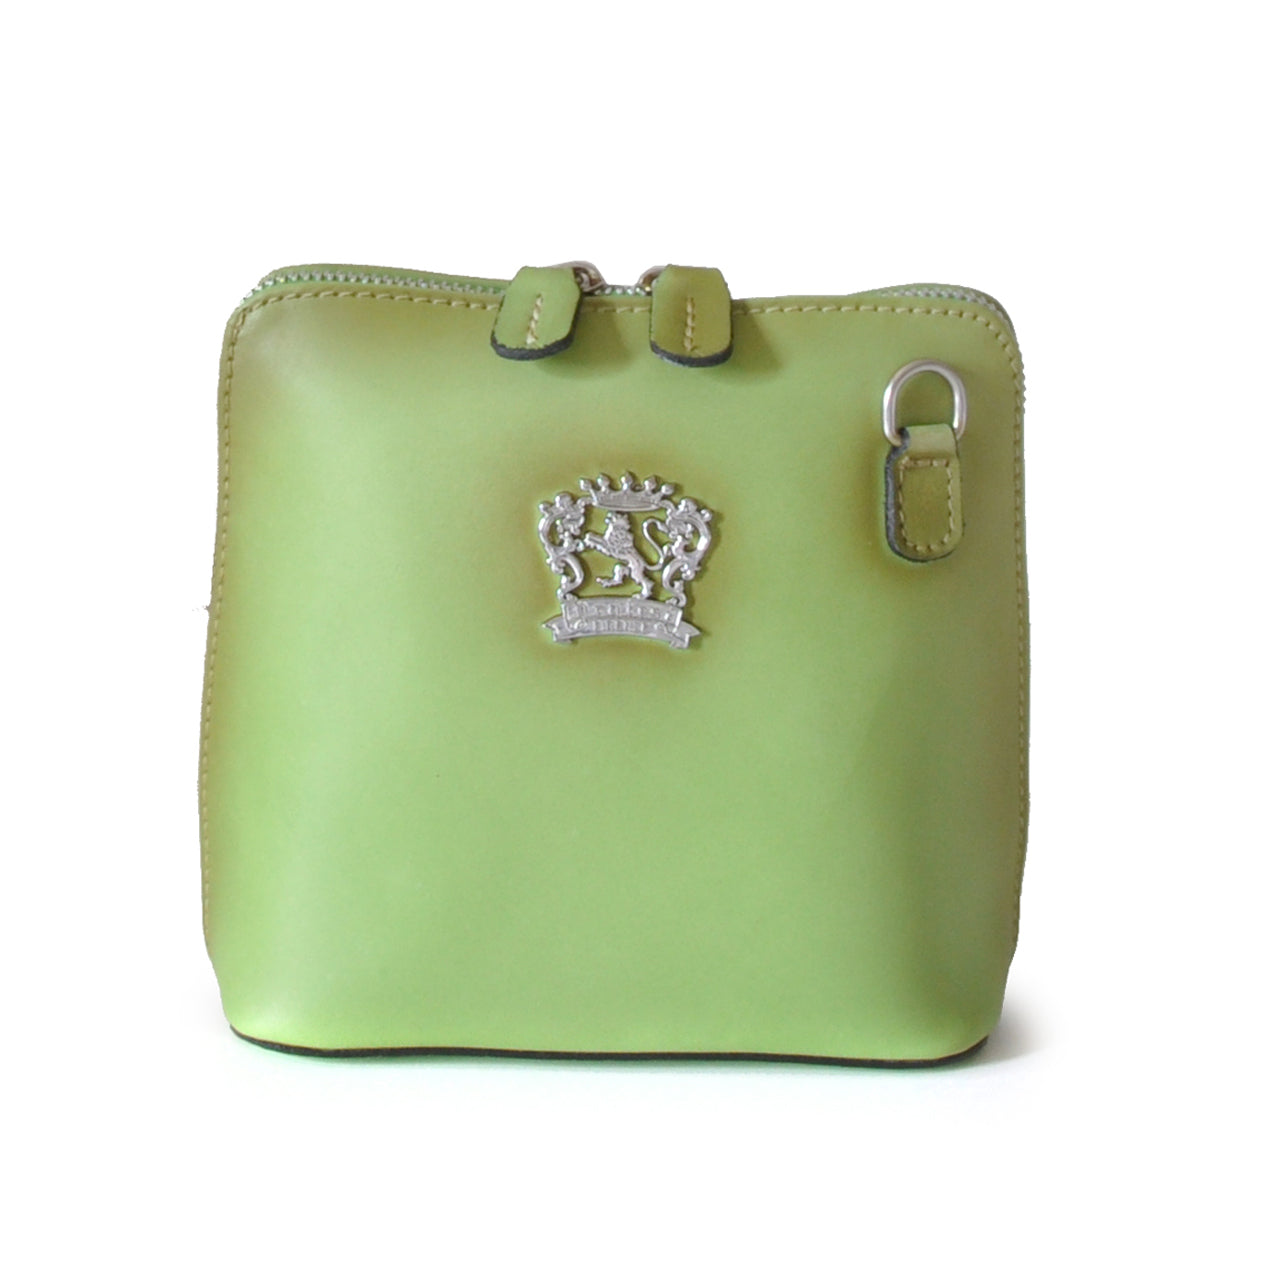 Pratesi Bag Volterra Bruce in genuine Italian leather - Vegetable Tanned Italian Leather Green